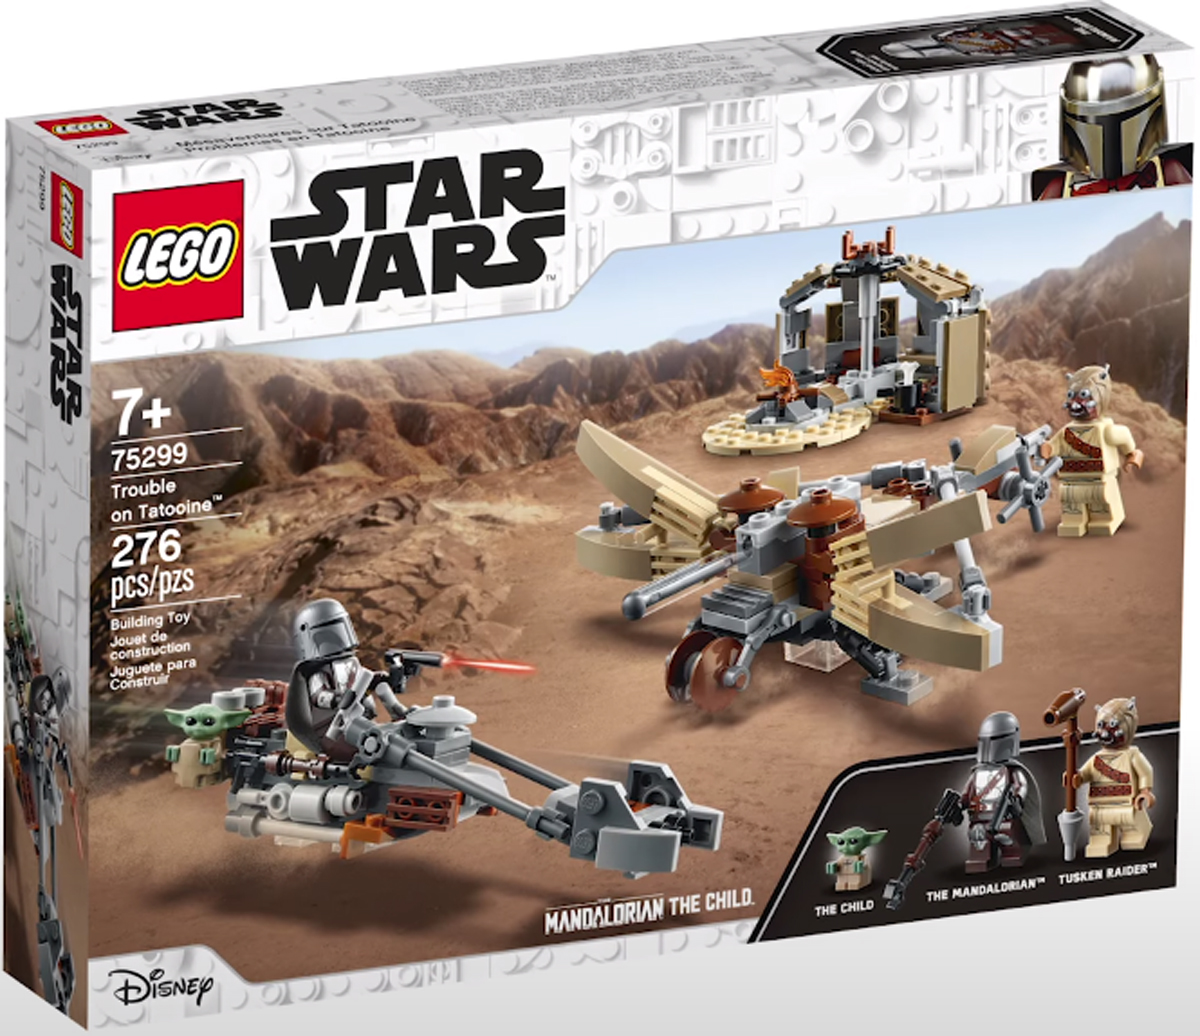 LEGO Star Wars Summer 2021 Mandalorian Sets Officially Announced